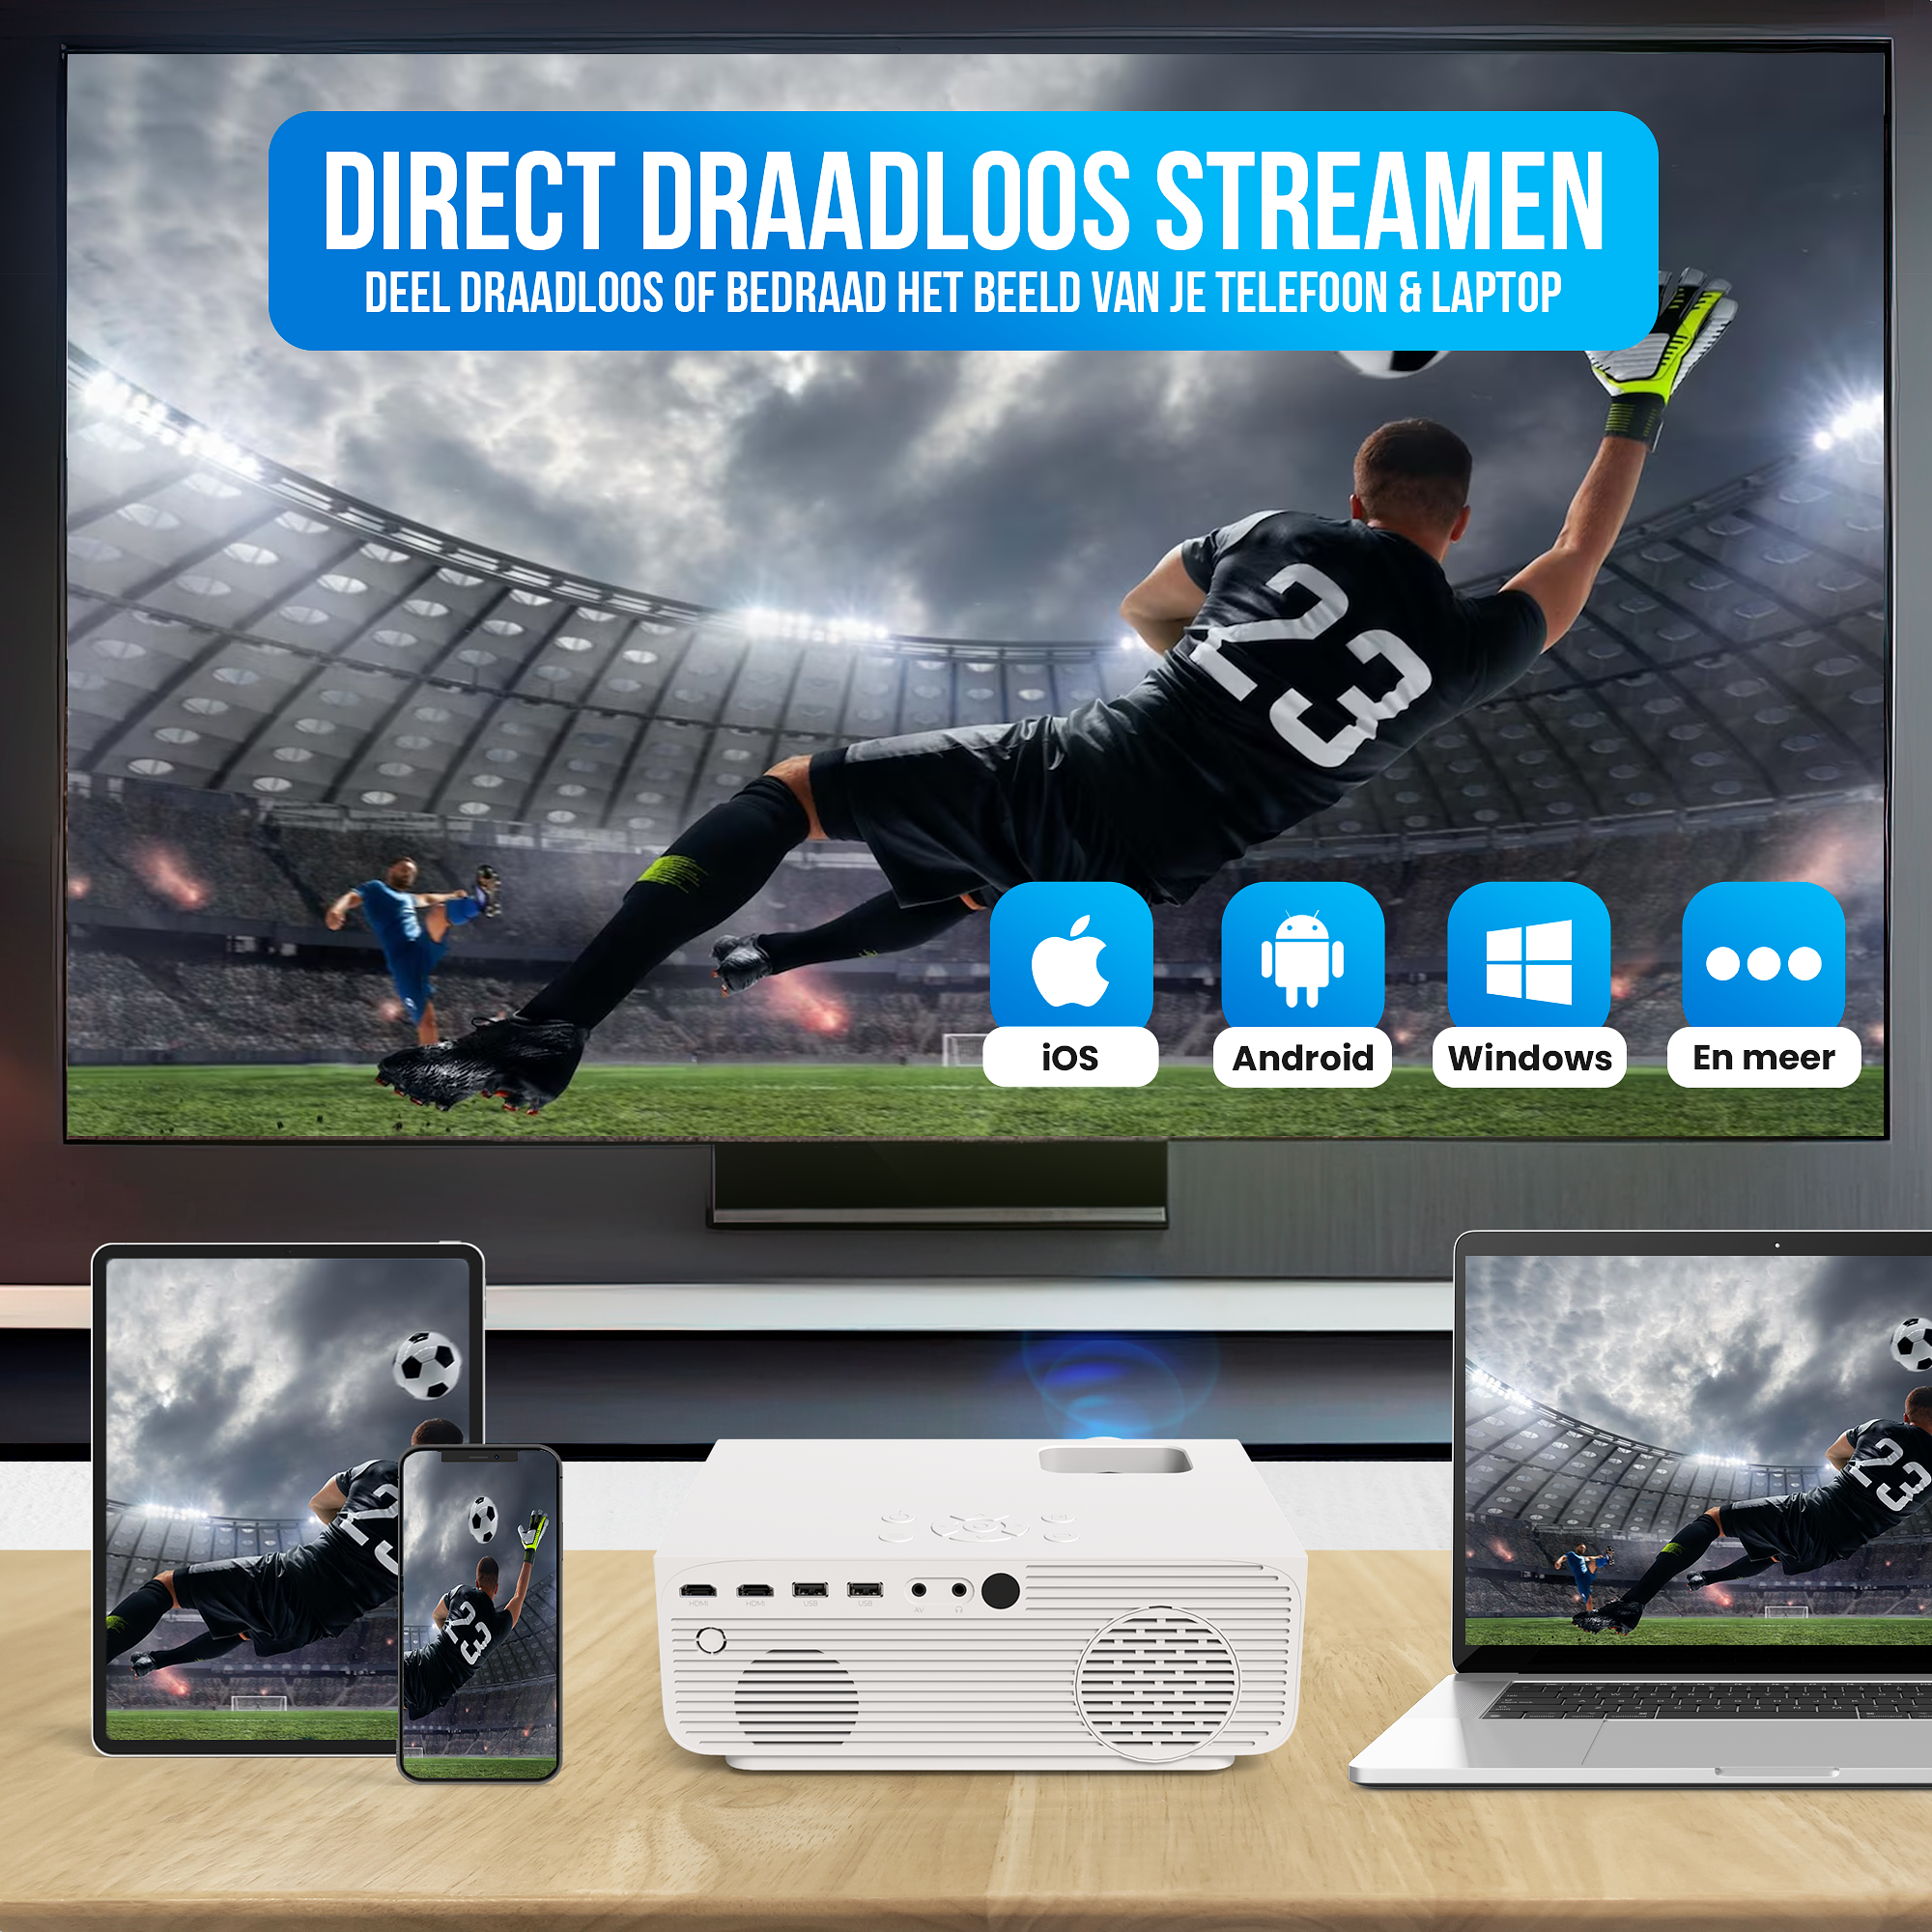 Strex Beamer - 1080P Full HD - 15000 Lumen - Draadloos Streamen - WiFi - Bluetooth - Mini Beamer - P